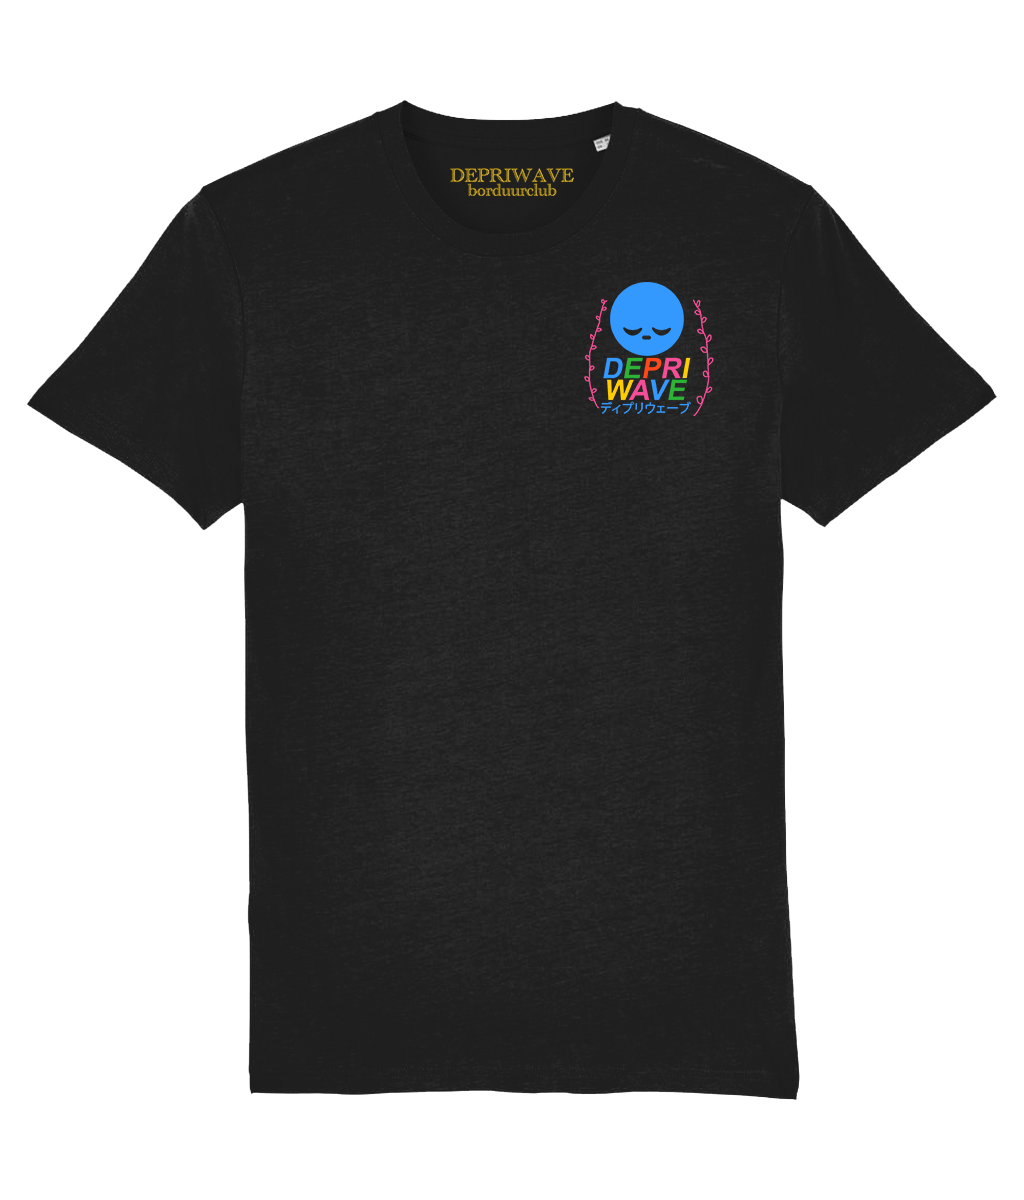 Depriwave Borduurclub no. 1 t-shirt zwart